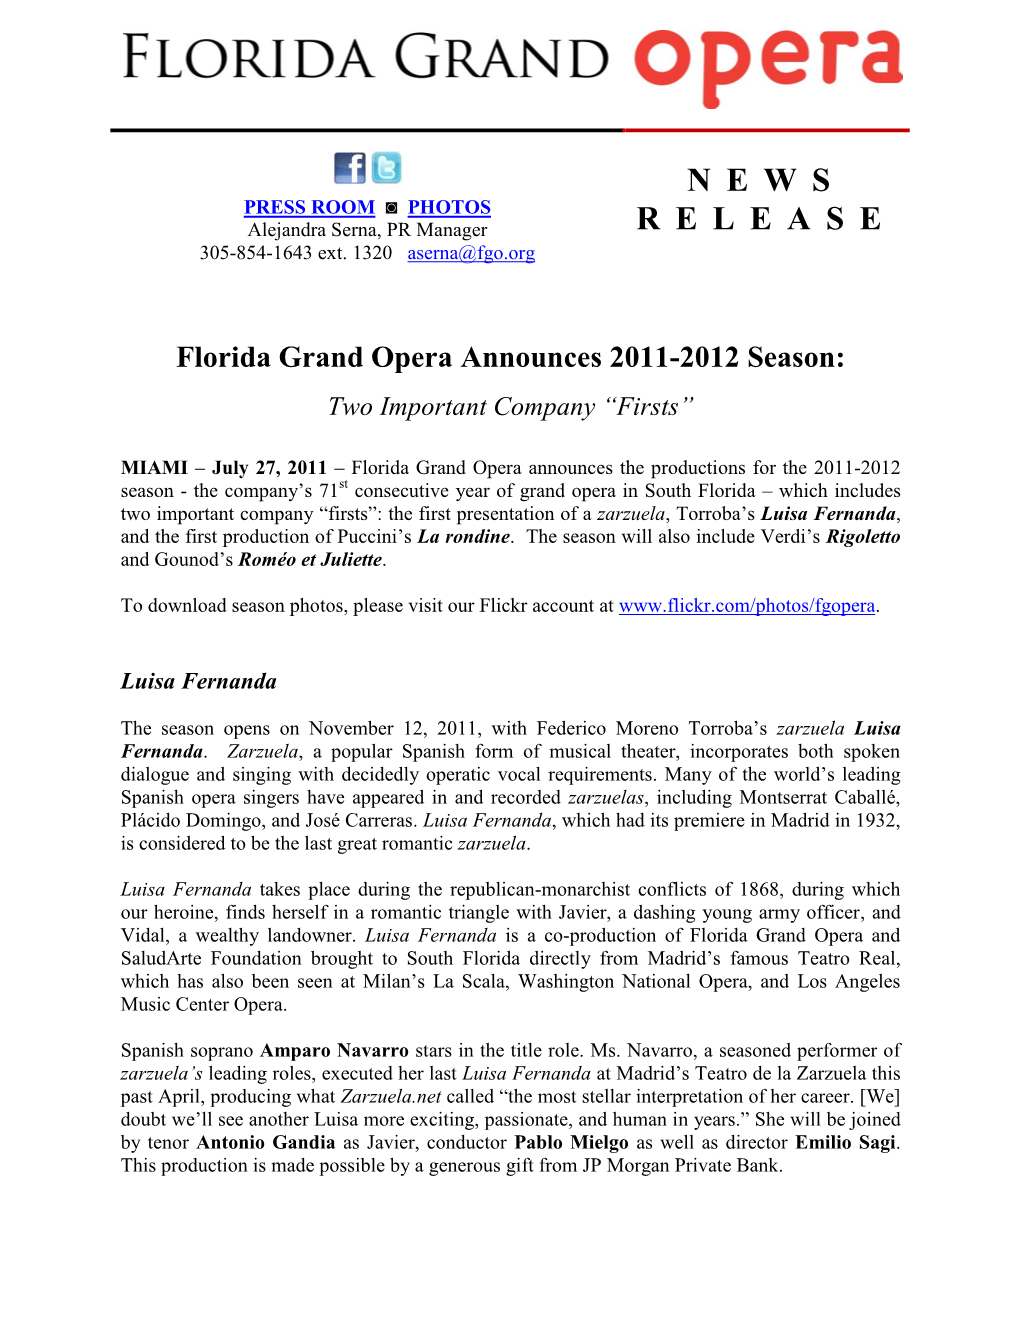 Florida Grand Opera Announces 2011-2012 Season: Two Important Company “Firsts”